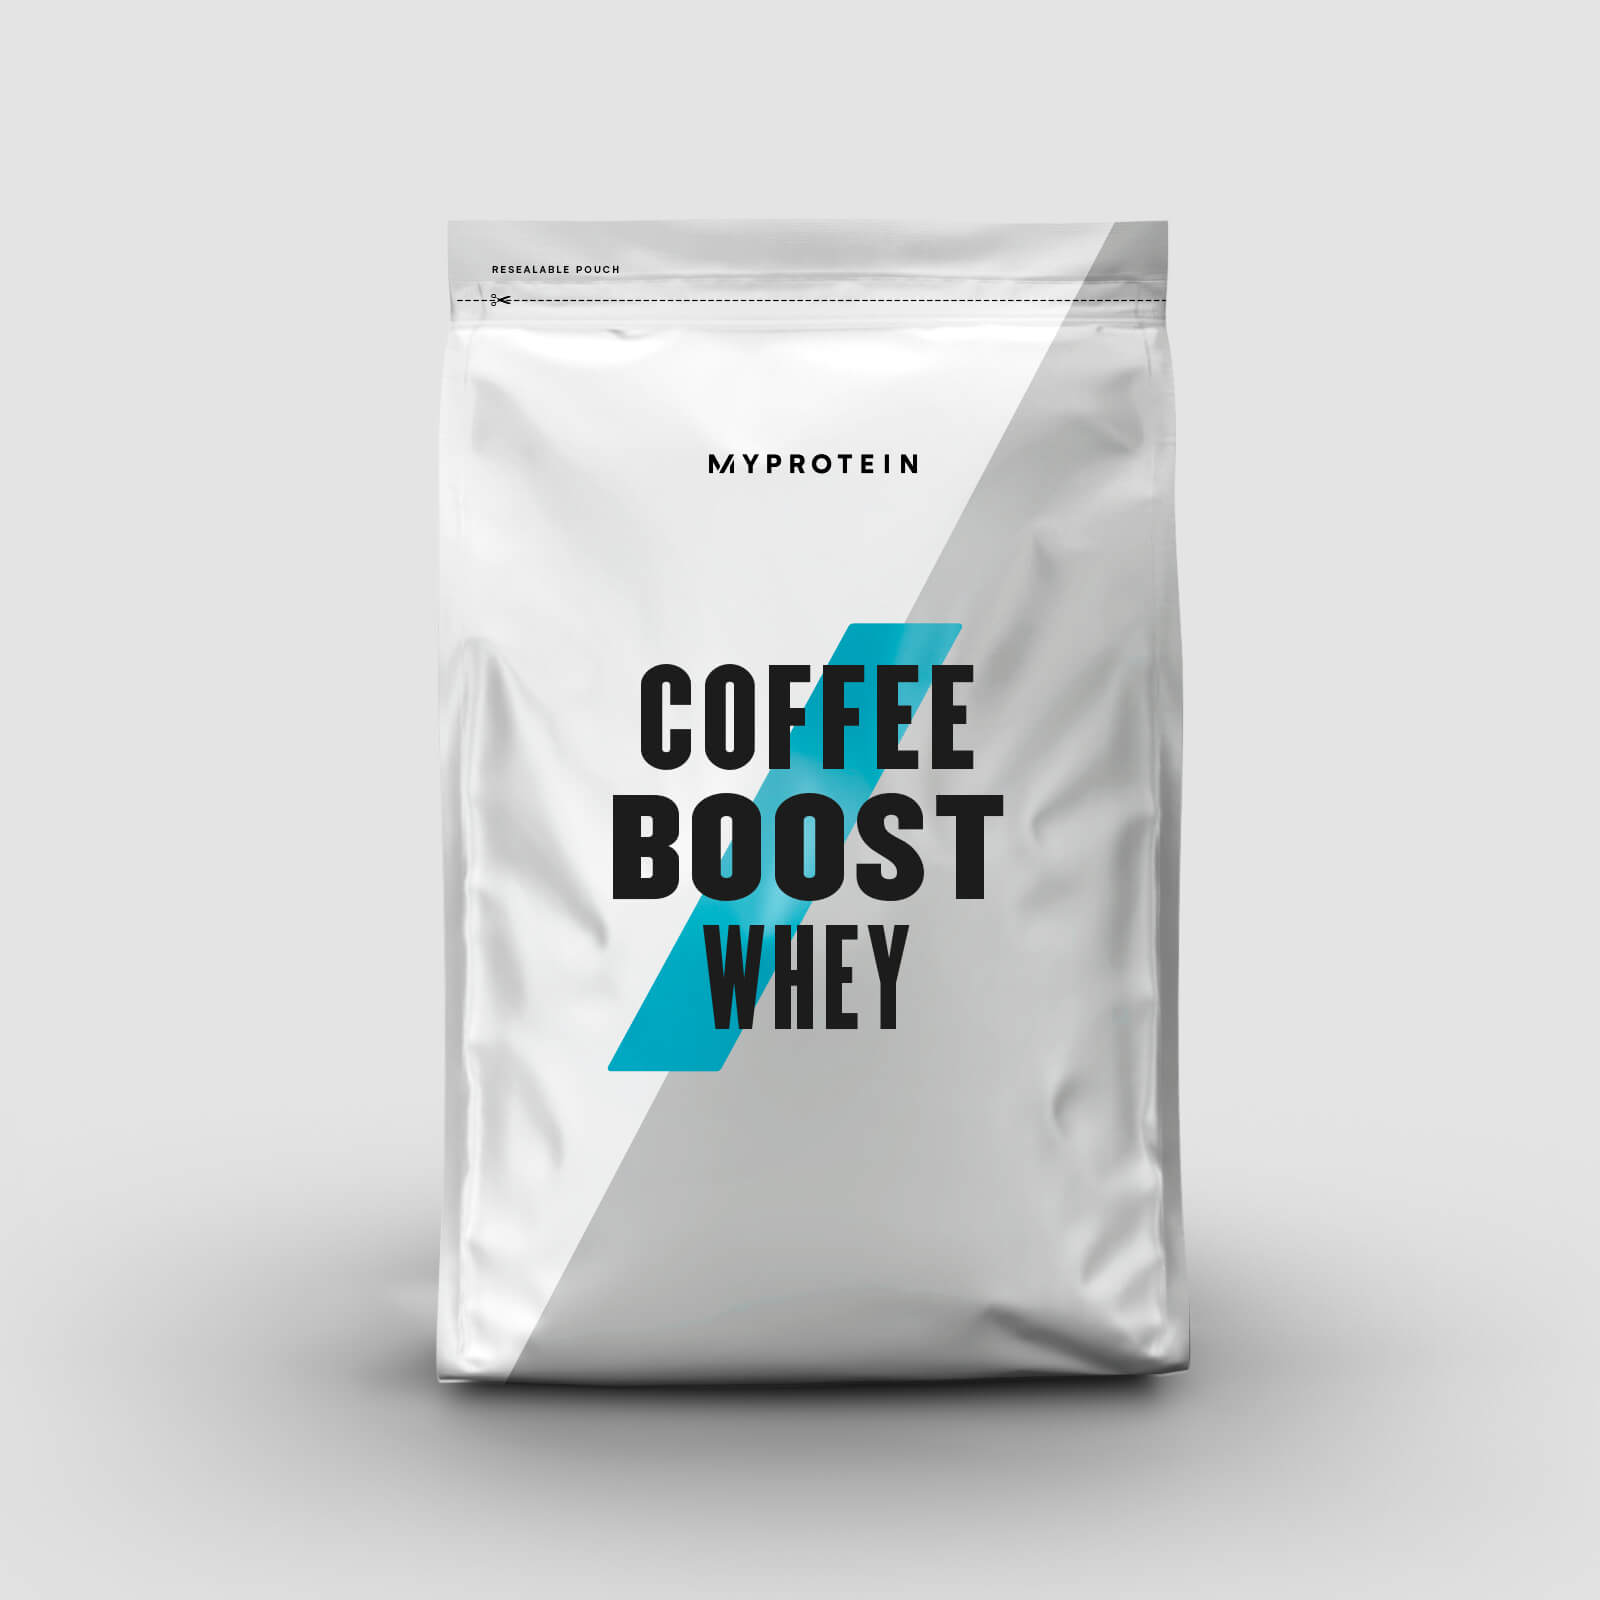 Soro de Leite Coffee Boost - 250g - Iced Latte